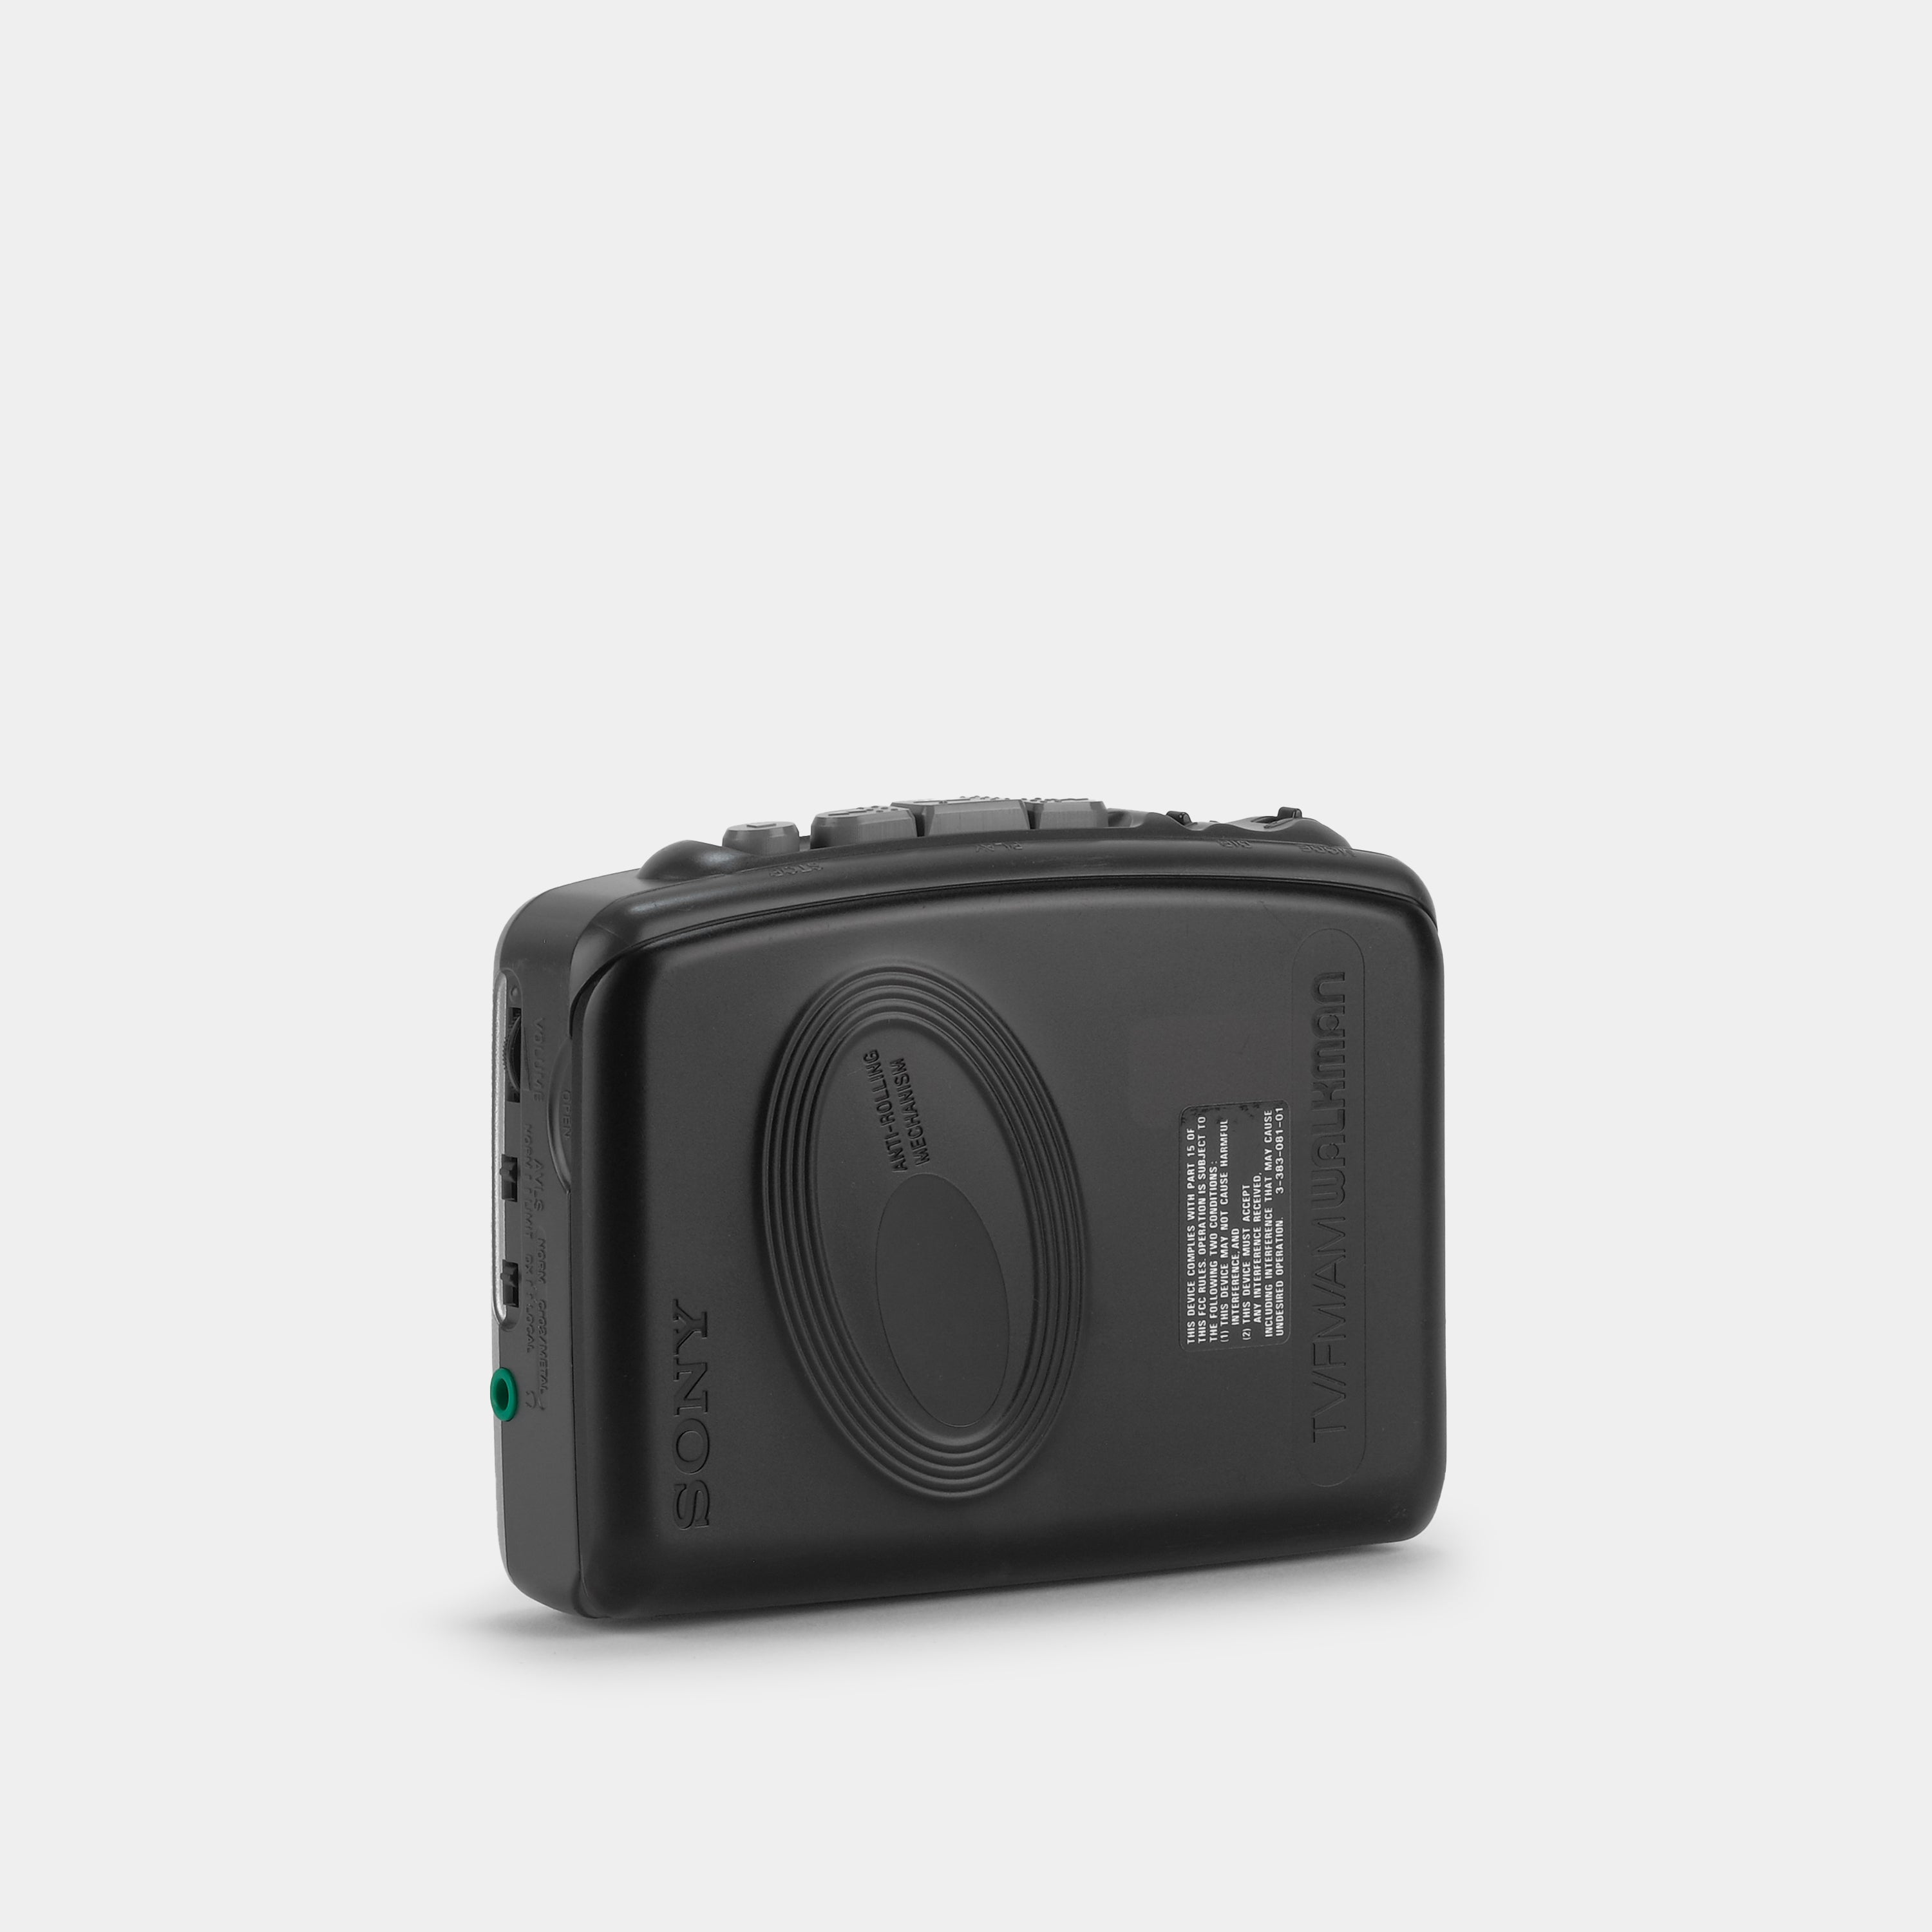 Sony Walkman WM-FX467 Auto Reverse AM/FM Portable Cassette Player